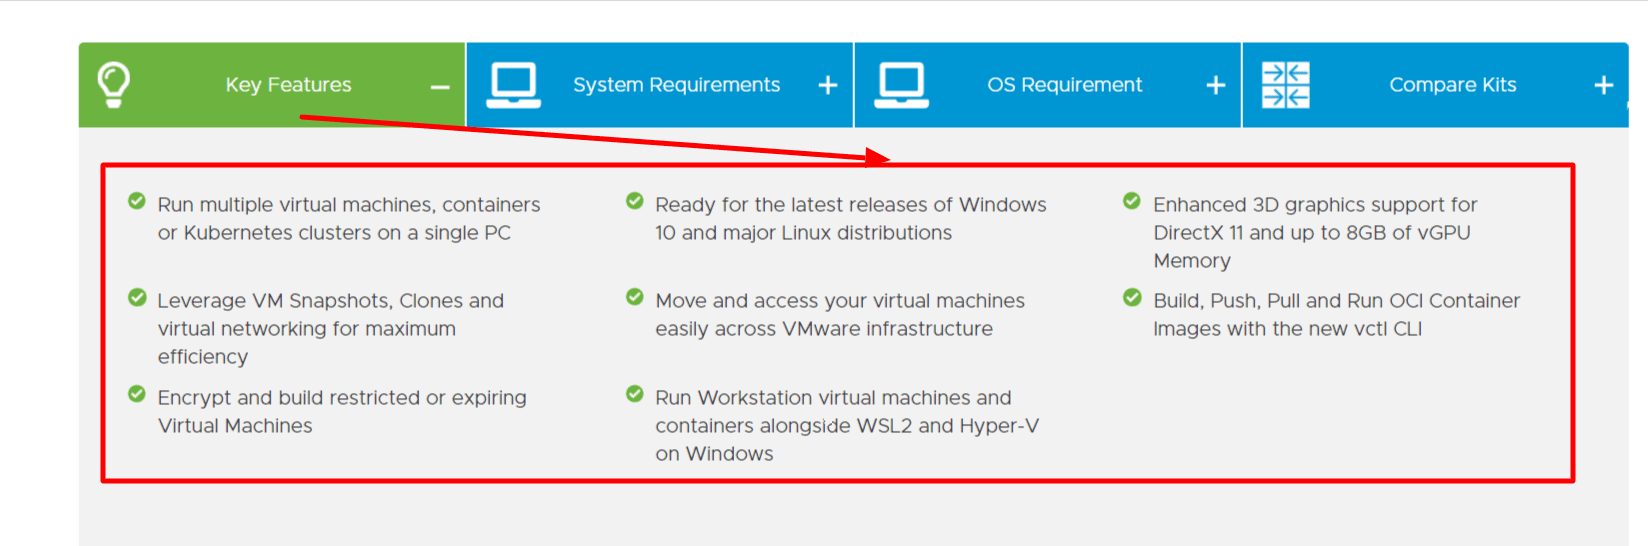 VMware Workstation 16 pro features